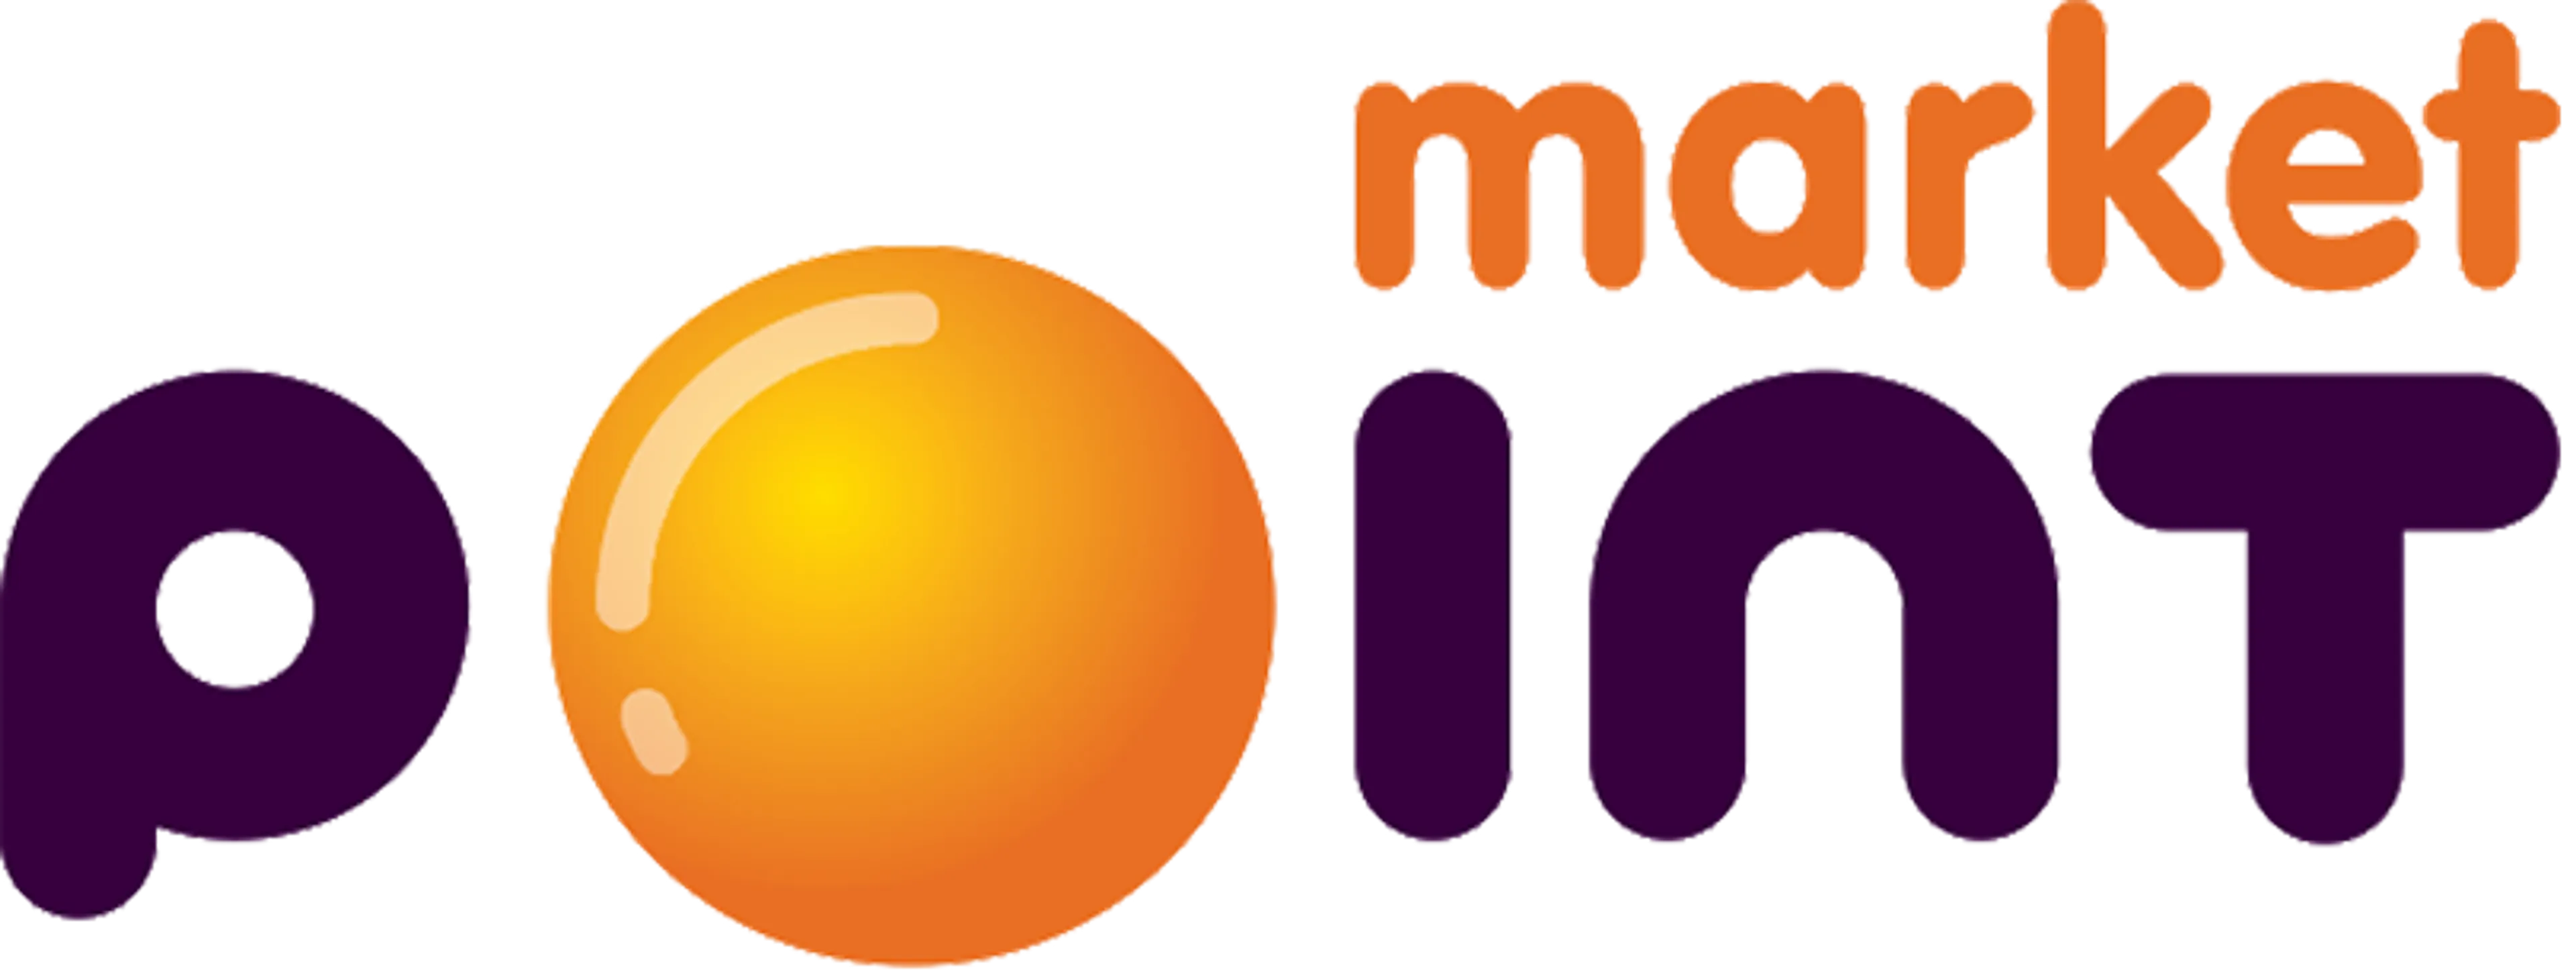 MARKET POINT logo